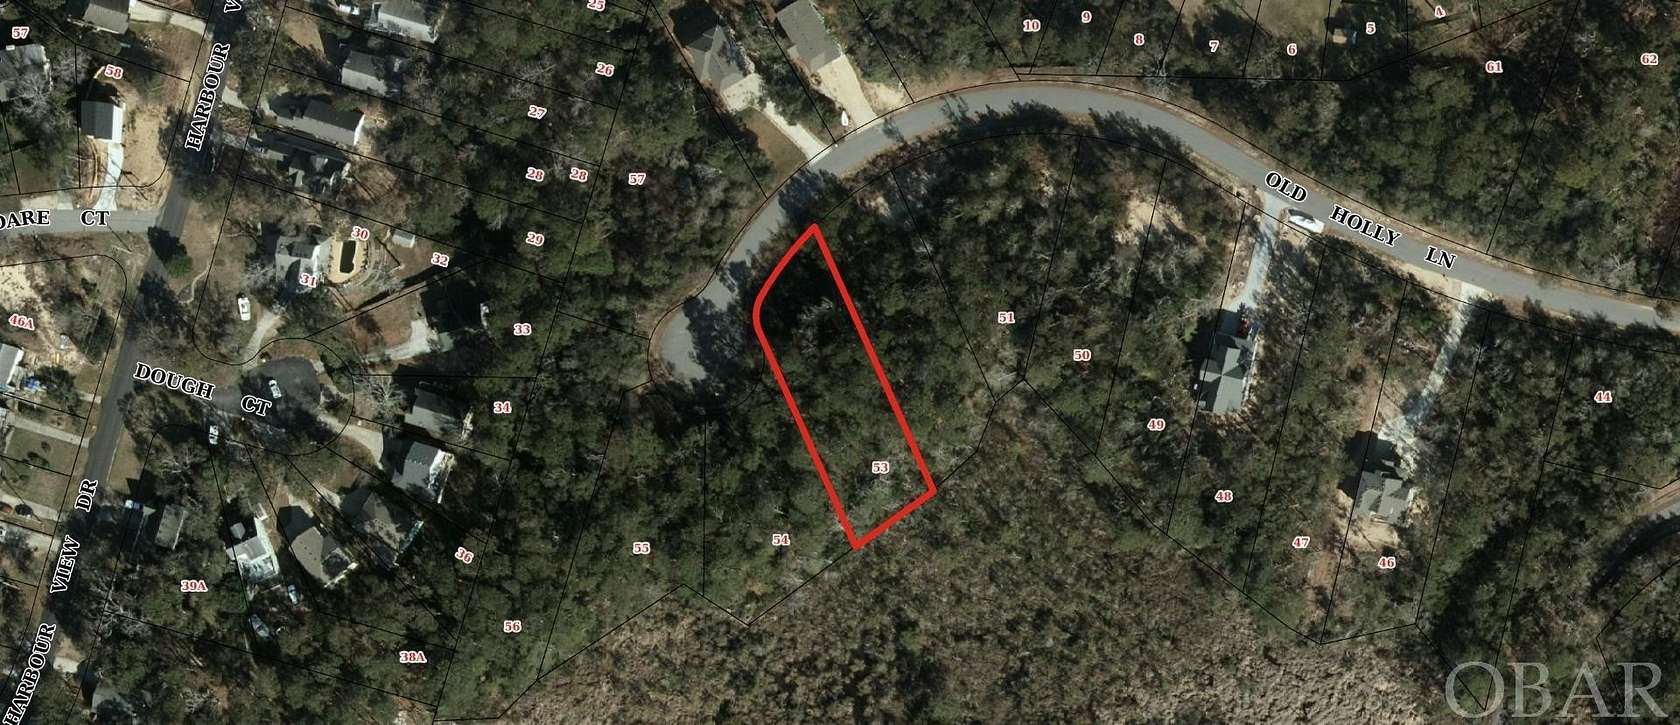 0.43 Acres of Residential Land for Sale in Kill Devil Hills, North Carolina